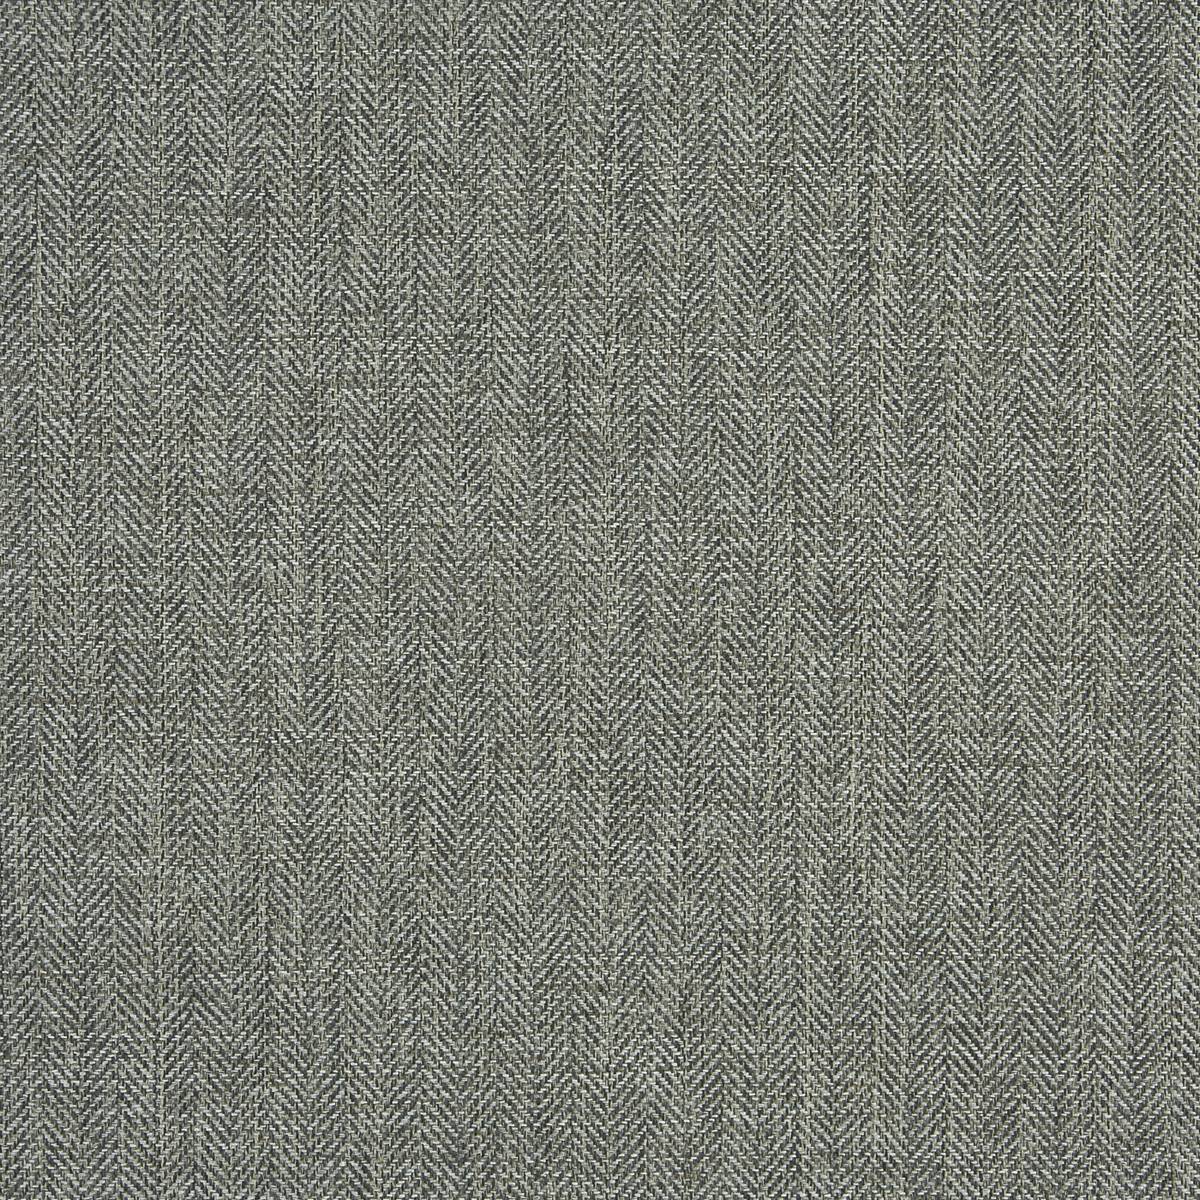 Herringbone Mountain Fabric by Prestigious Textiles